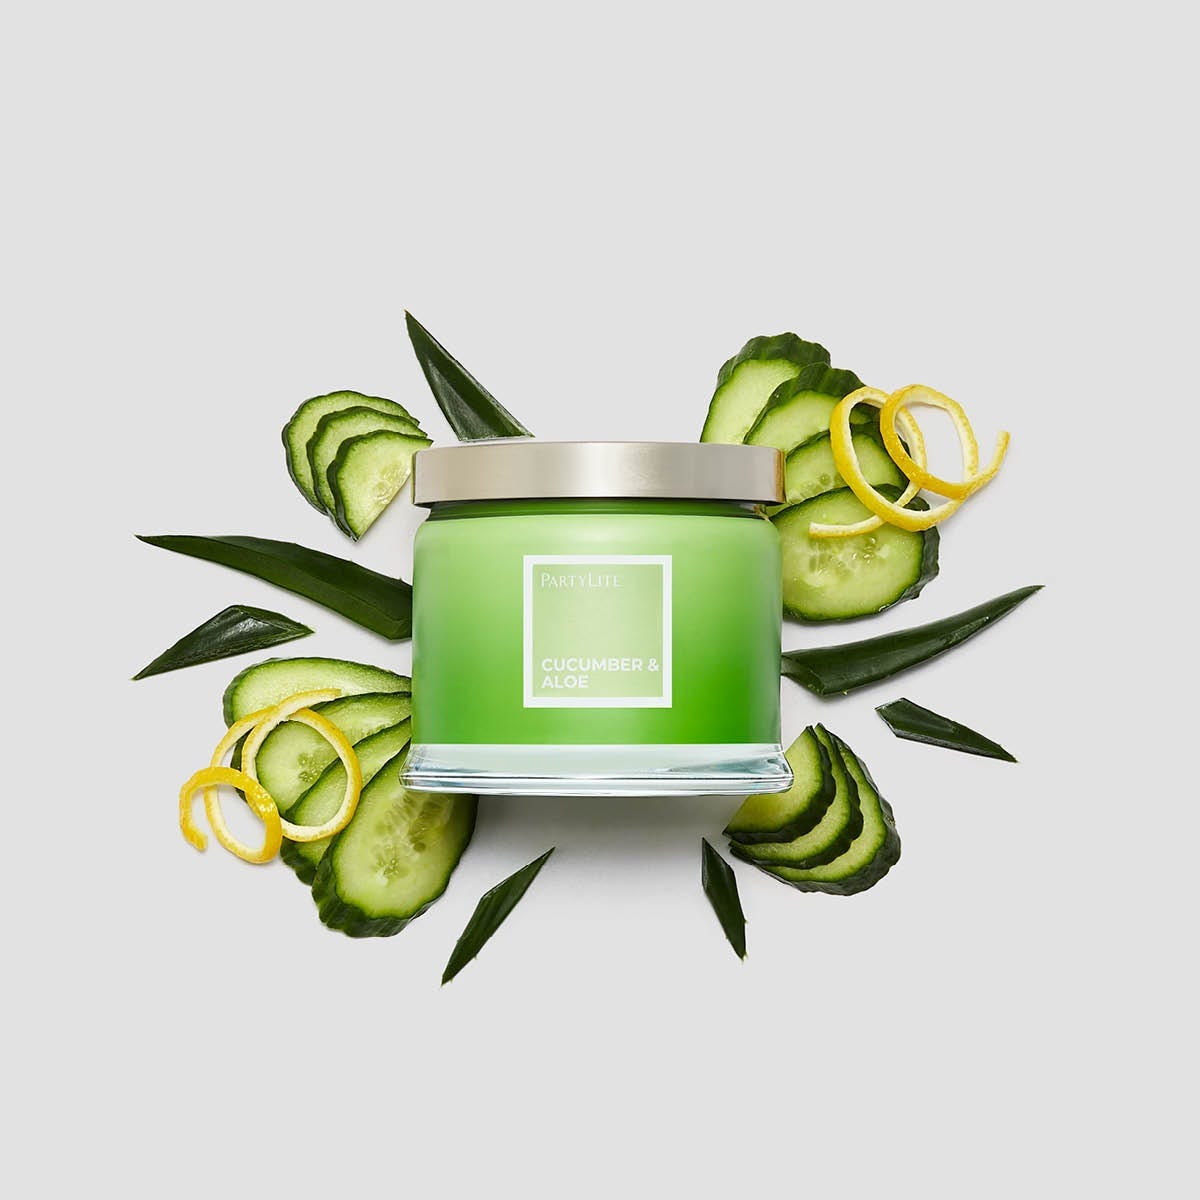 Cucumber & Aloe 3-Wick Jar Candle - PartyLite US